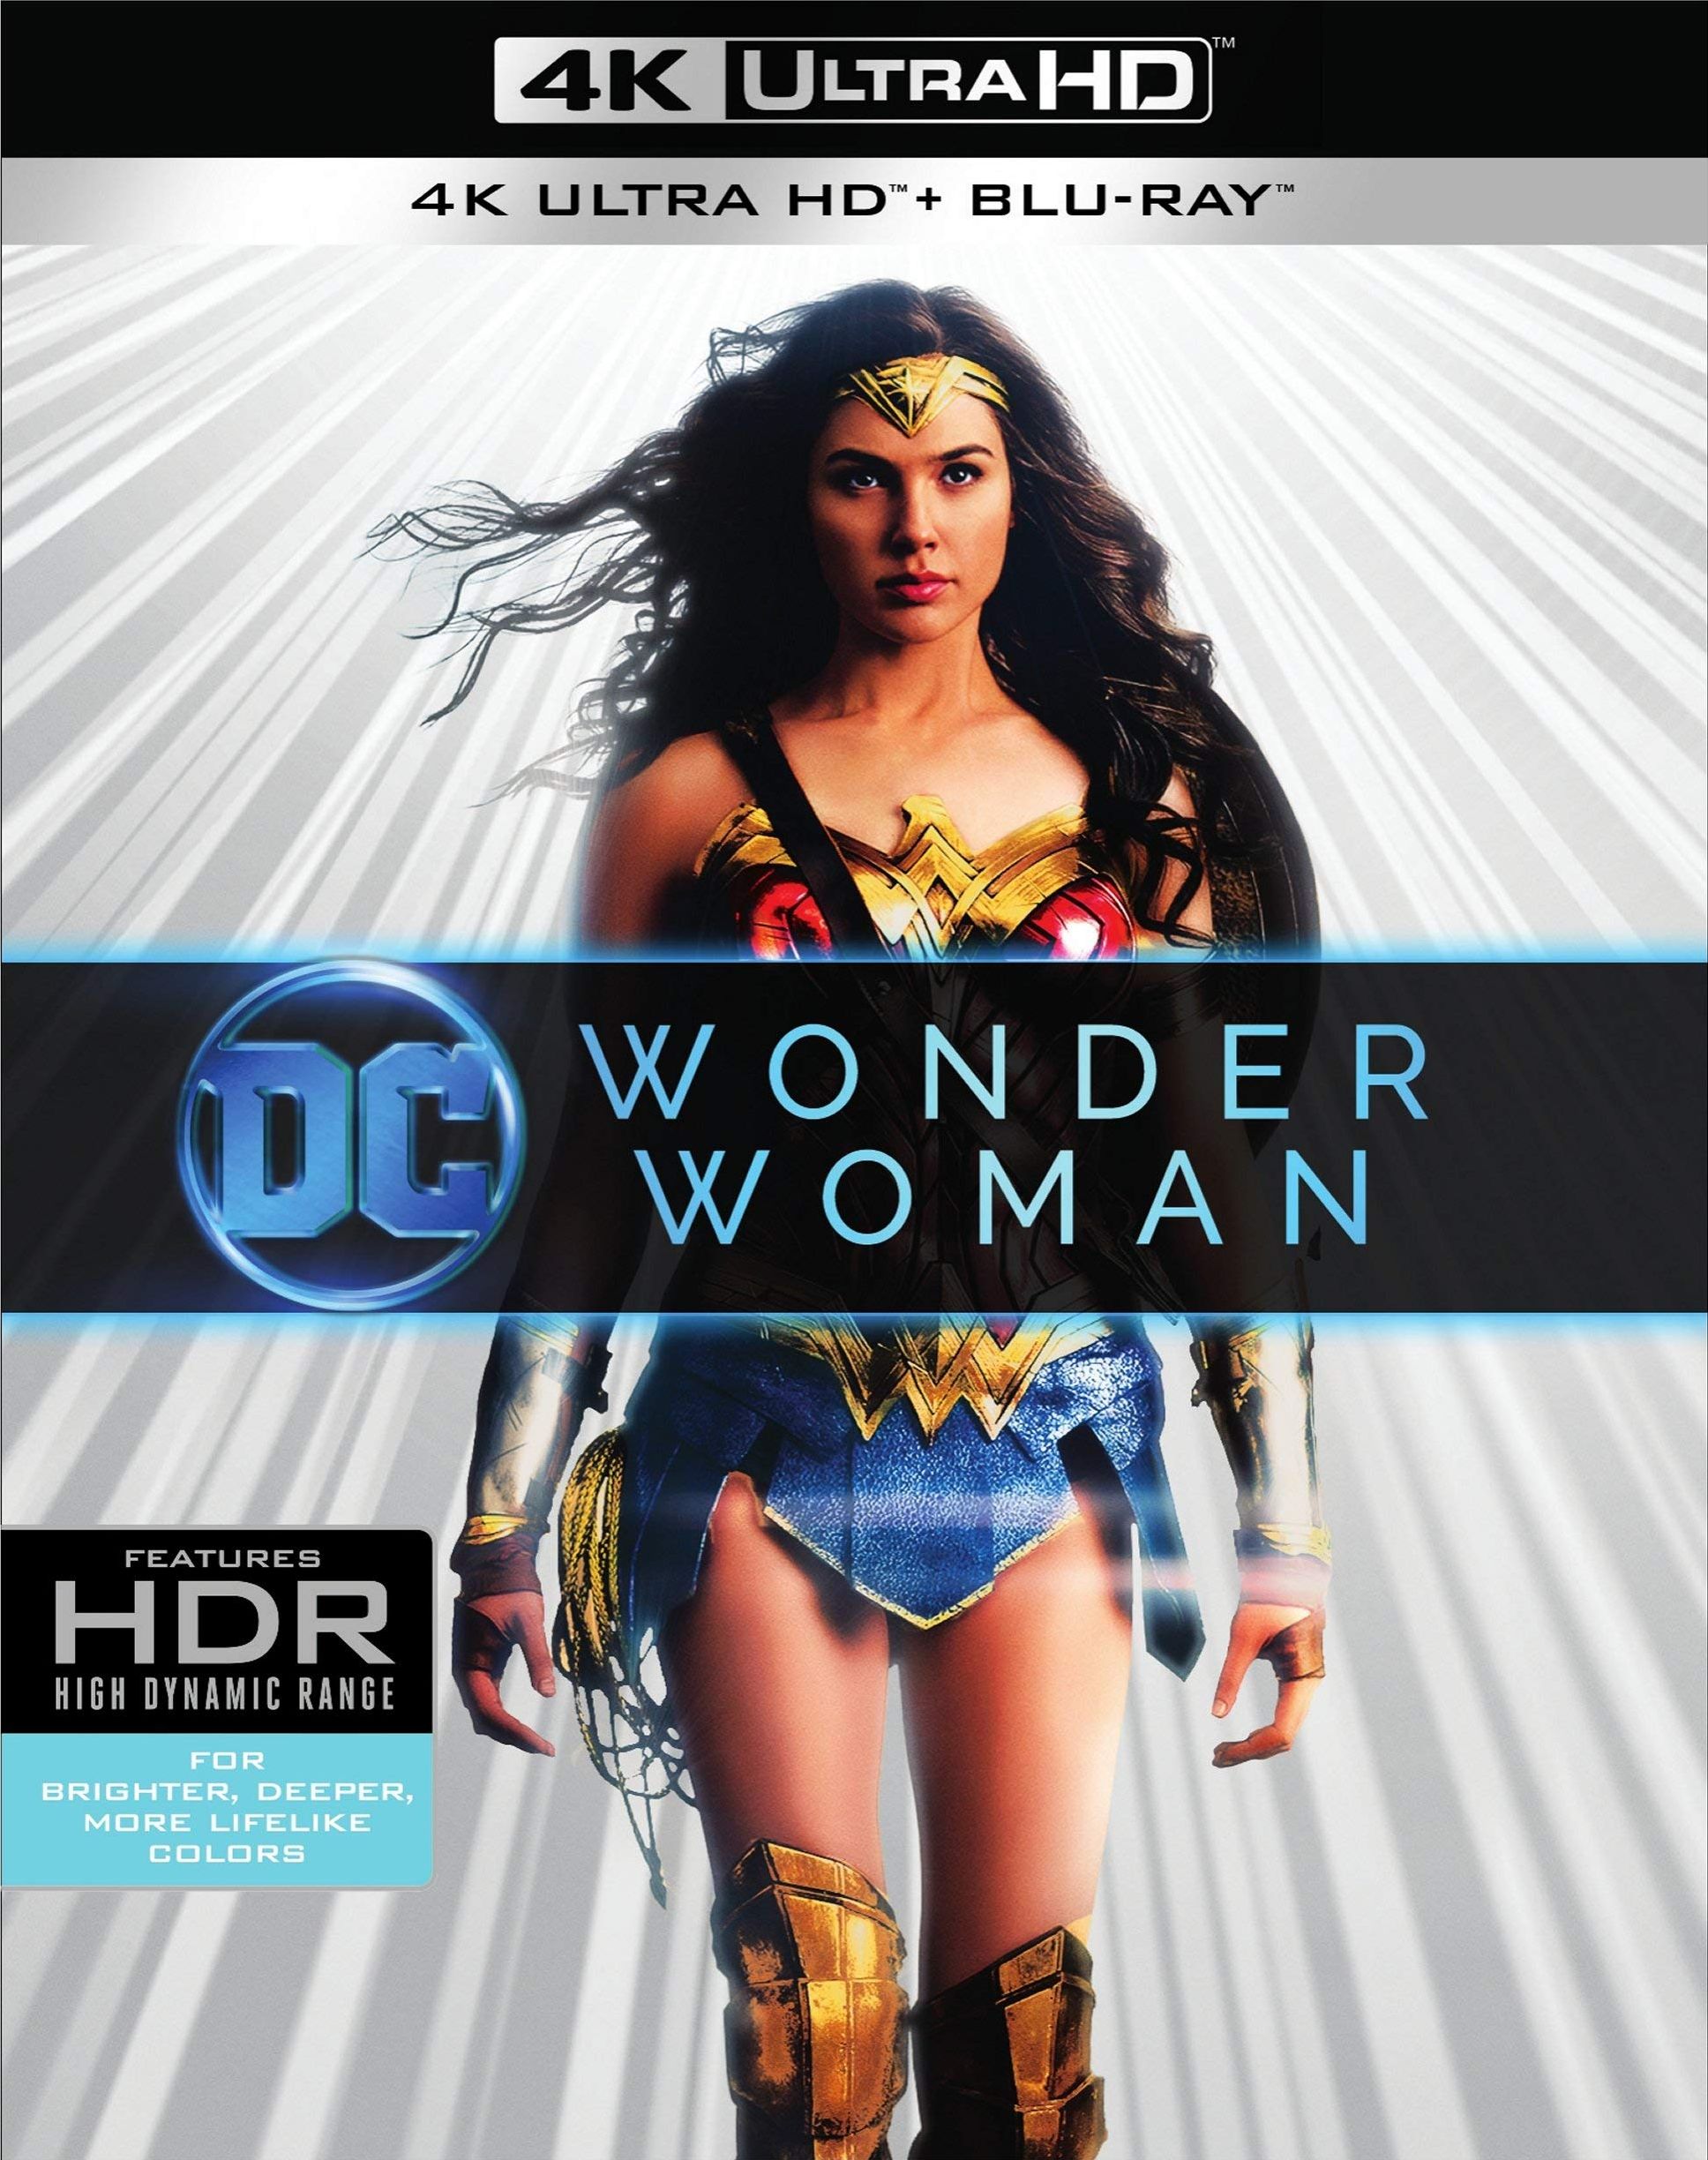 Wonder Woman Release Date September 19, 2017